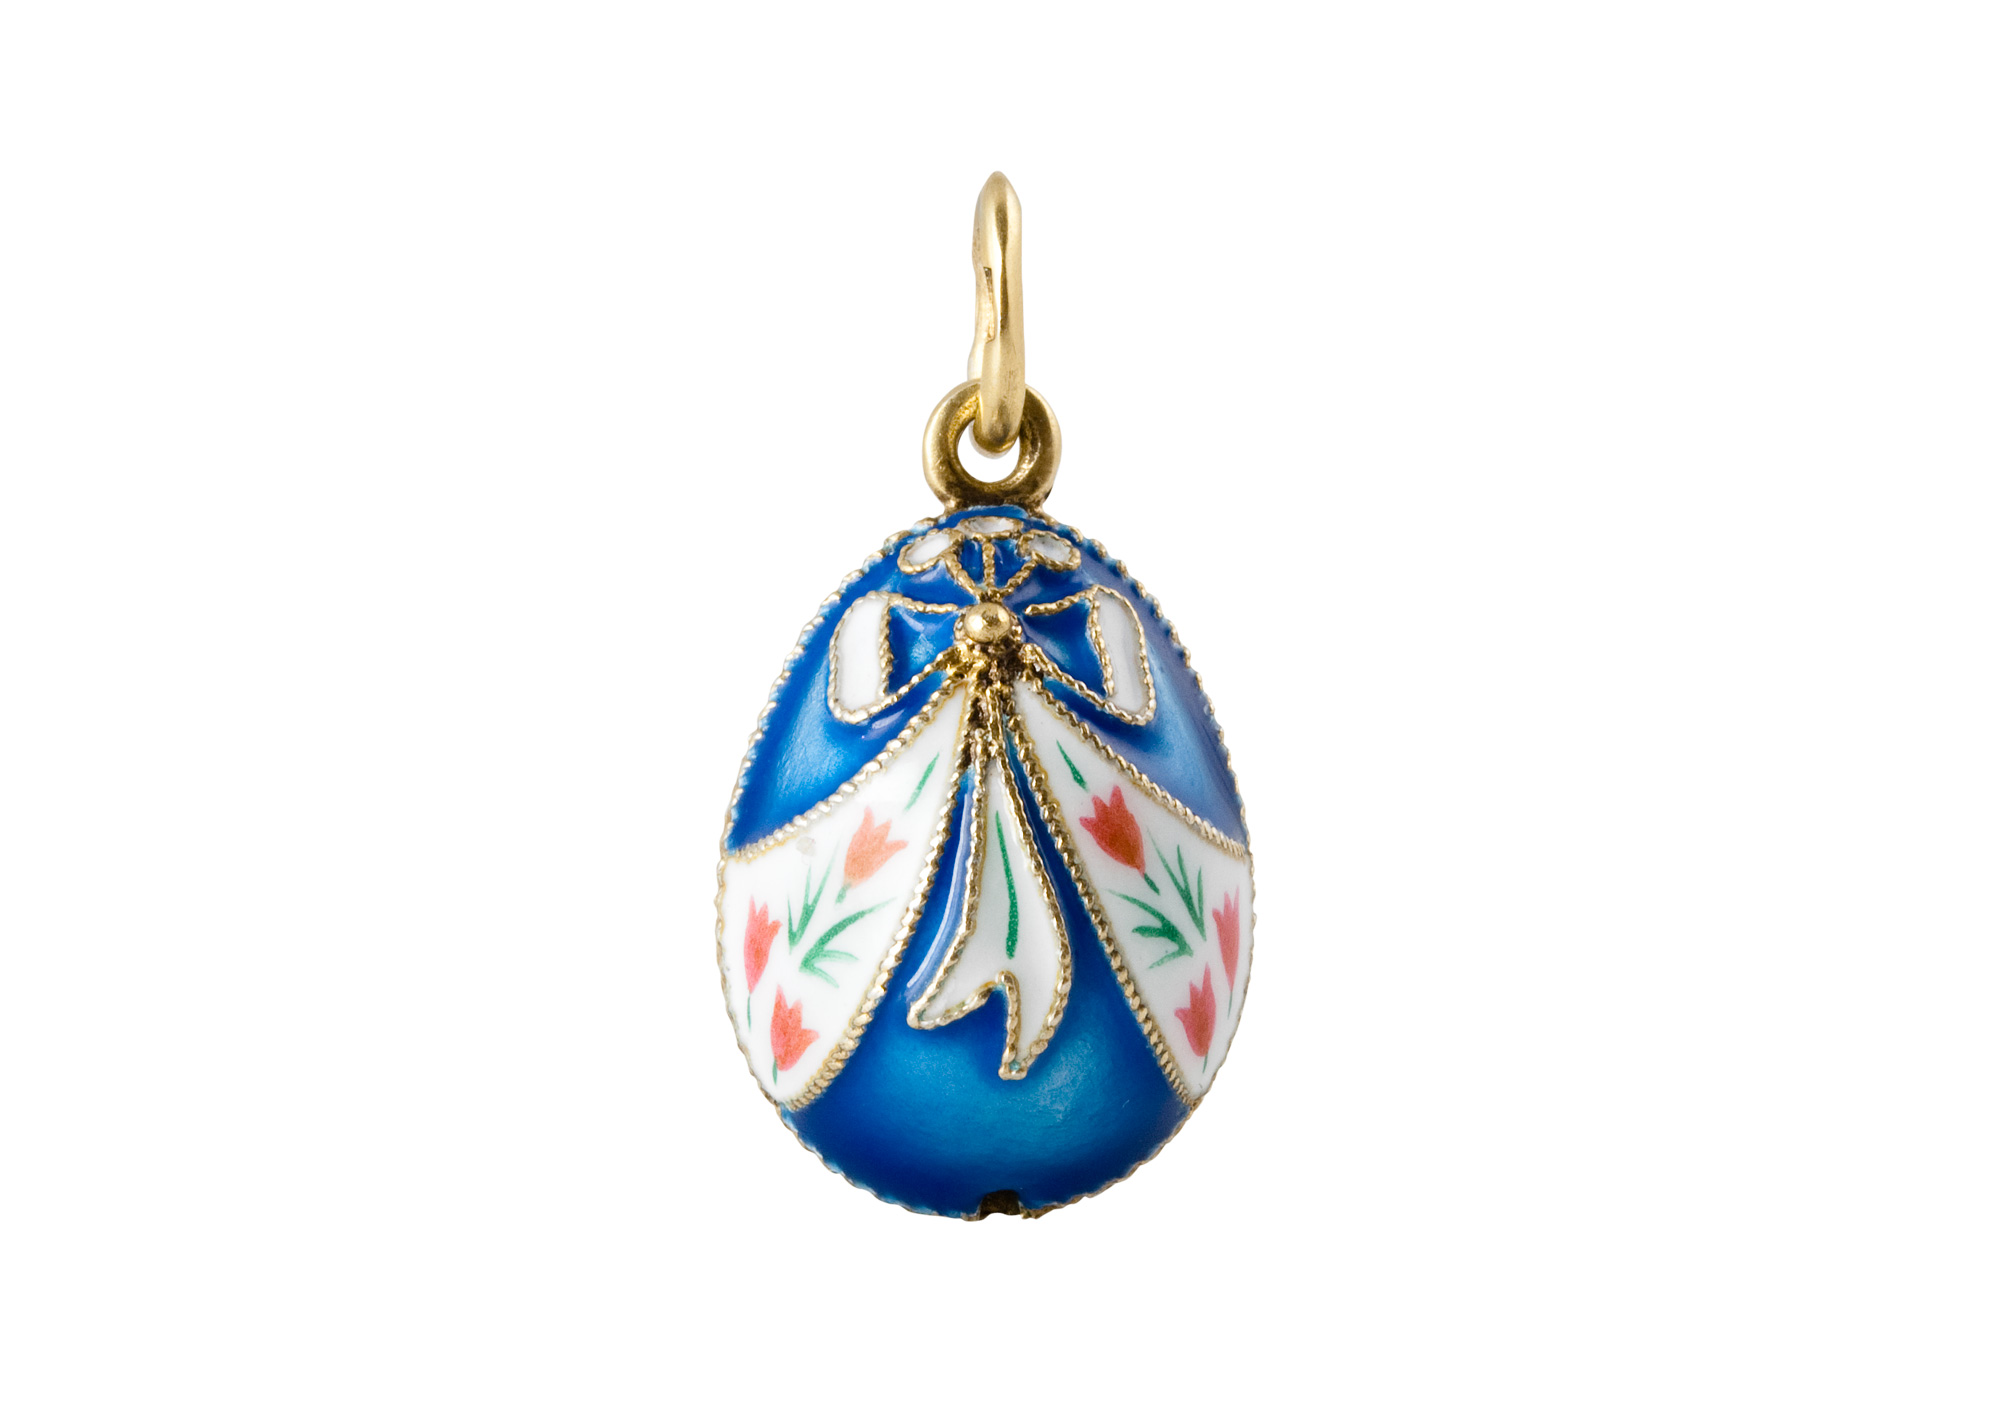 Buy Egg Pendant "Blue Country Ribbons" at GoldenCockerel.com